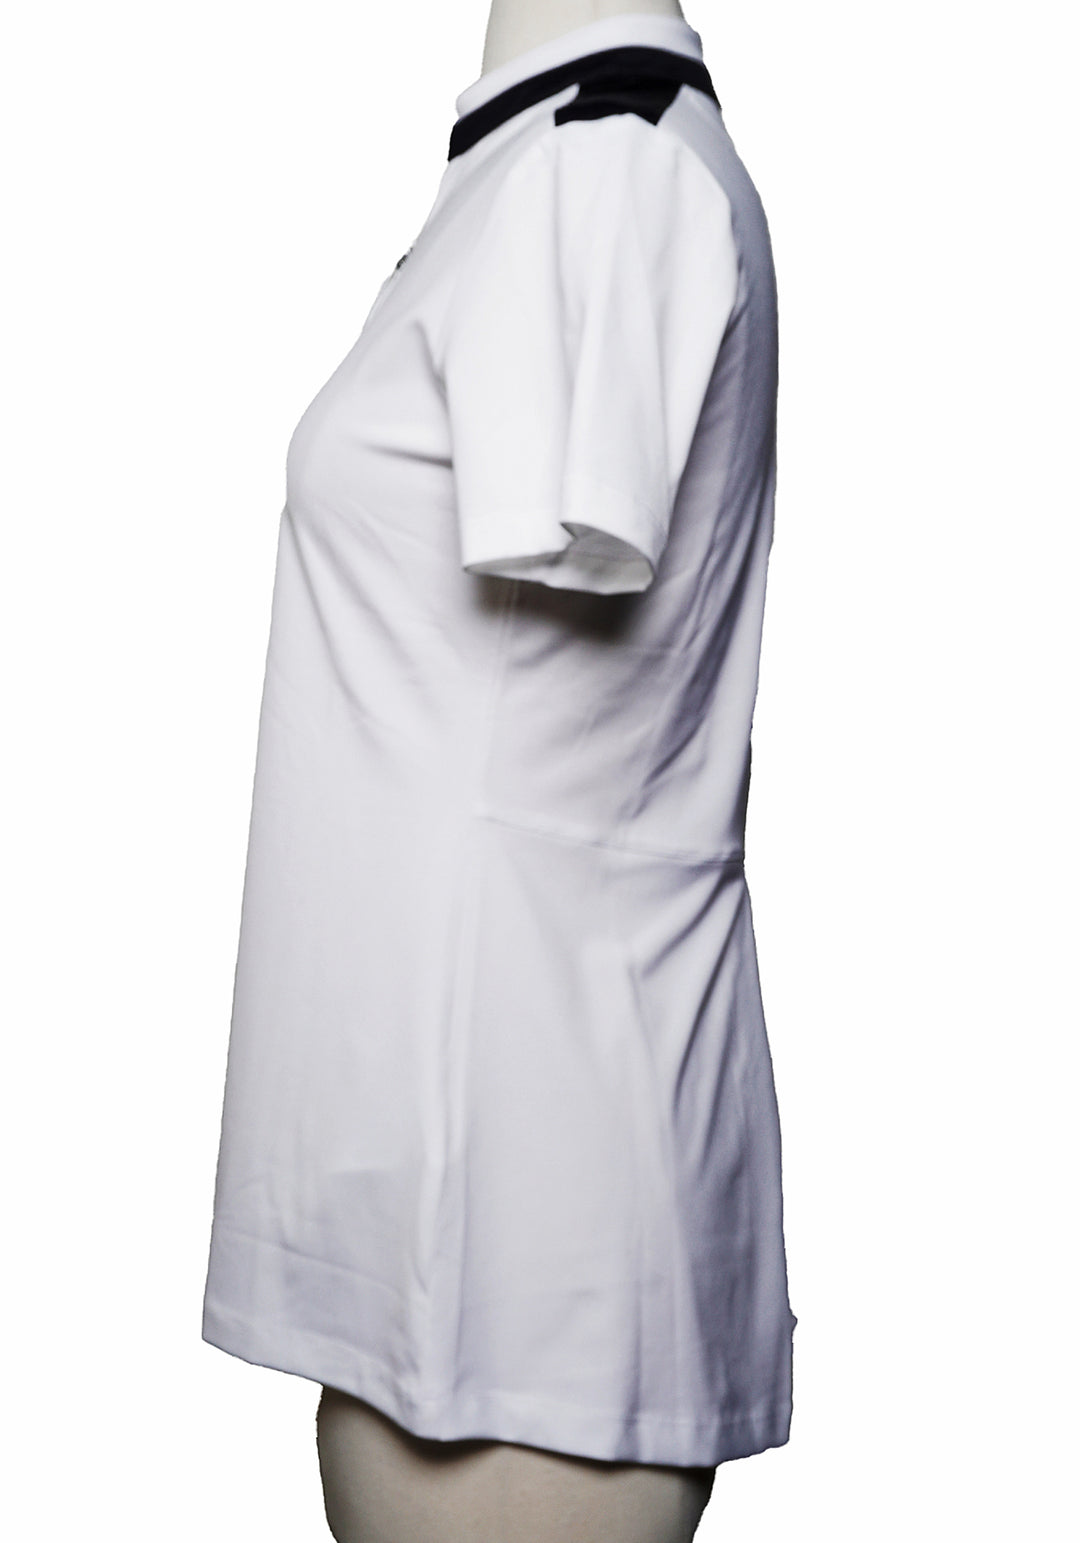 Greg Norman Endangered Zip Short Sleeve Top - White - Skorzie